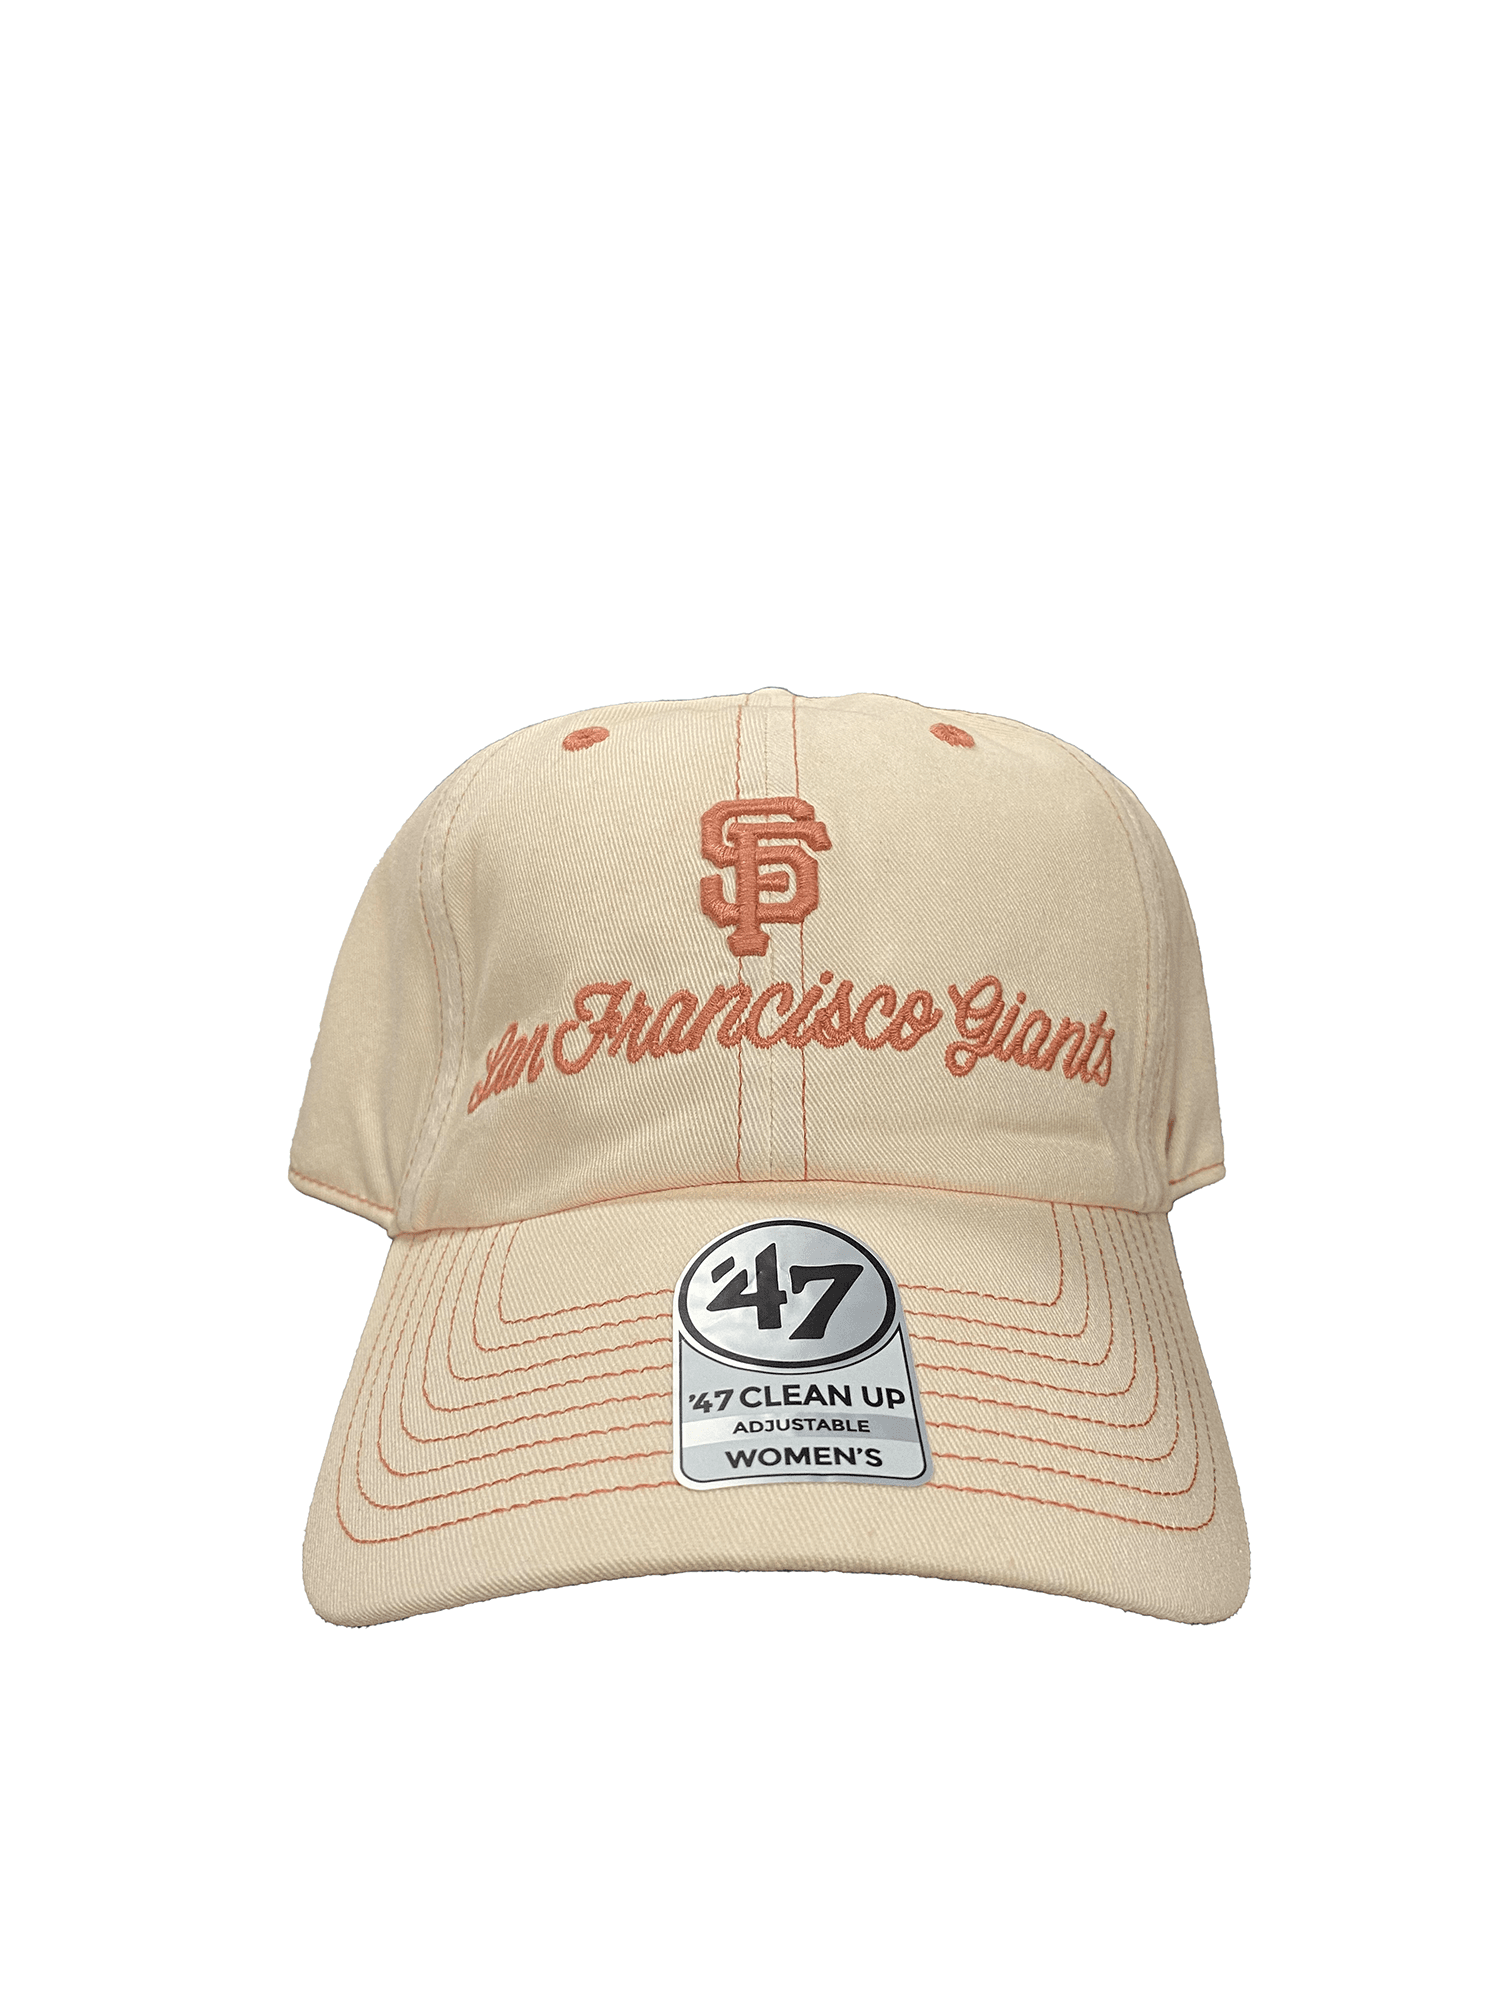 SF Giants Women's 47 Brand Adjustable Clean Up Hat- Highgrove